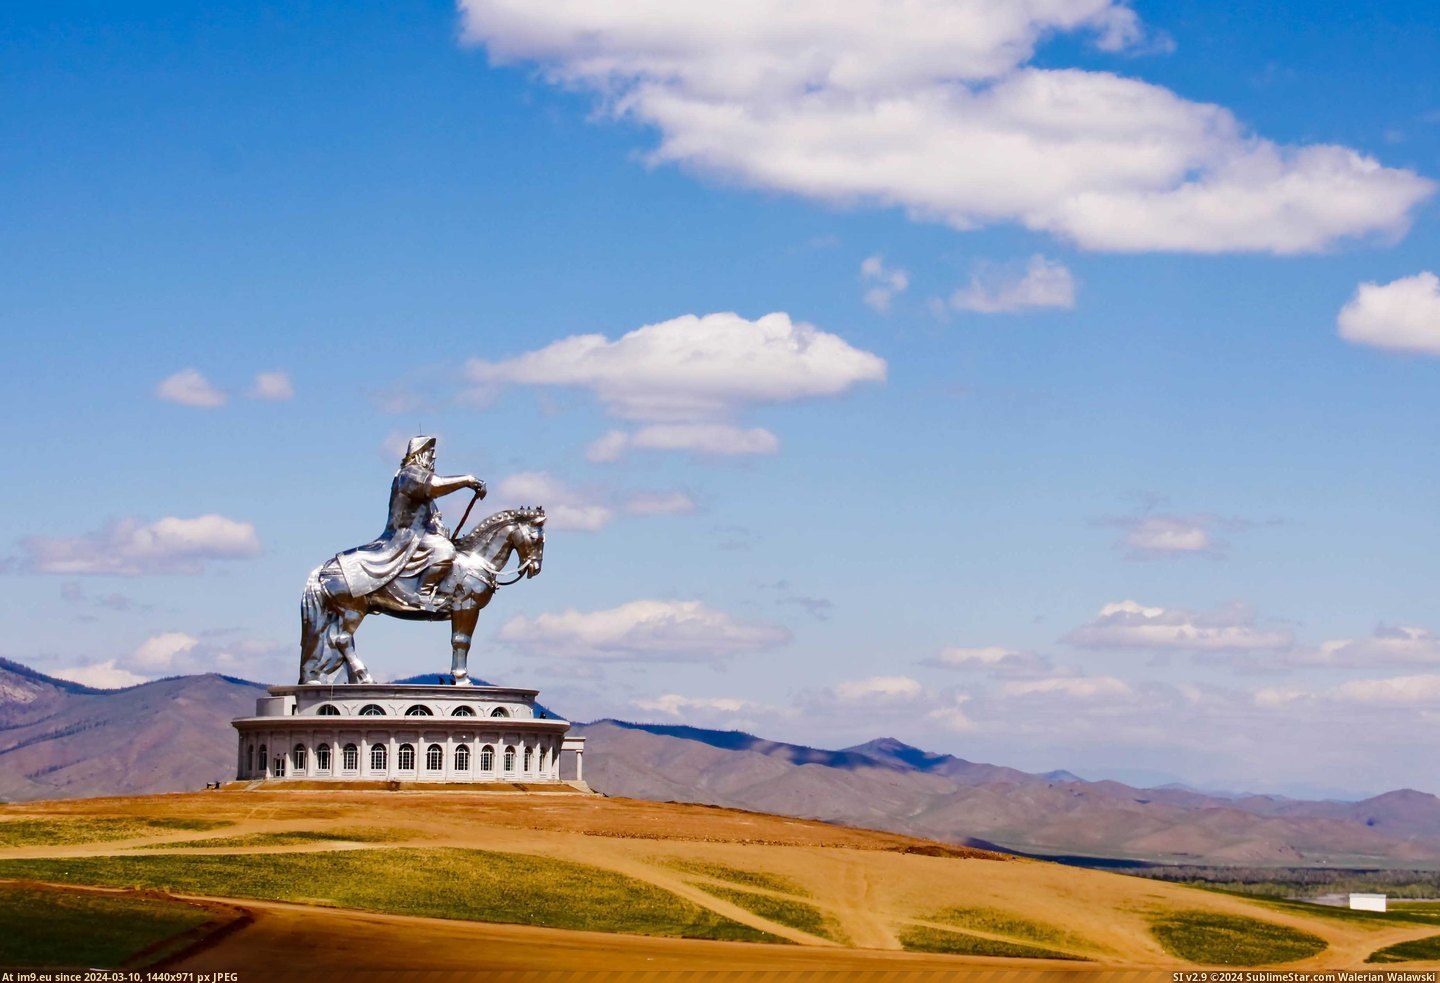 #Statue #Khan #Mongolia [Pics] Statue of Genghis Khan in Mongolia Pic. (Obraz z album My r/PICS favs))